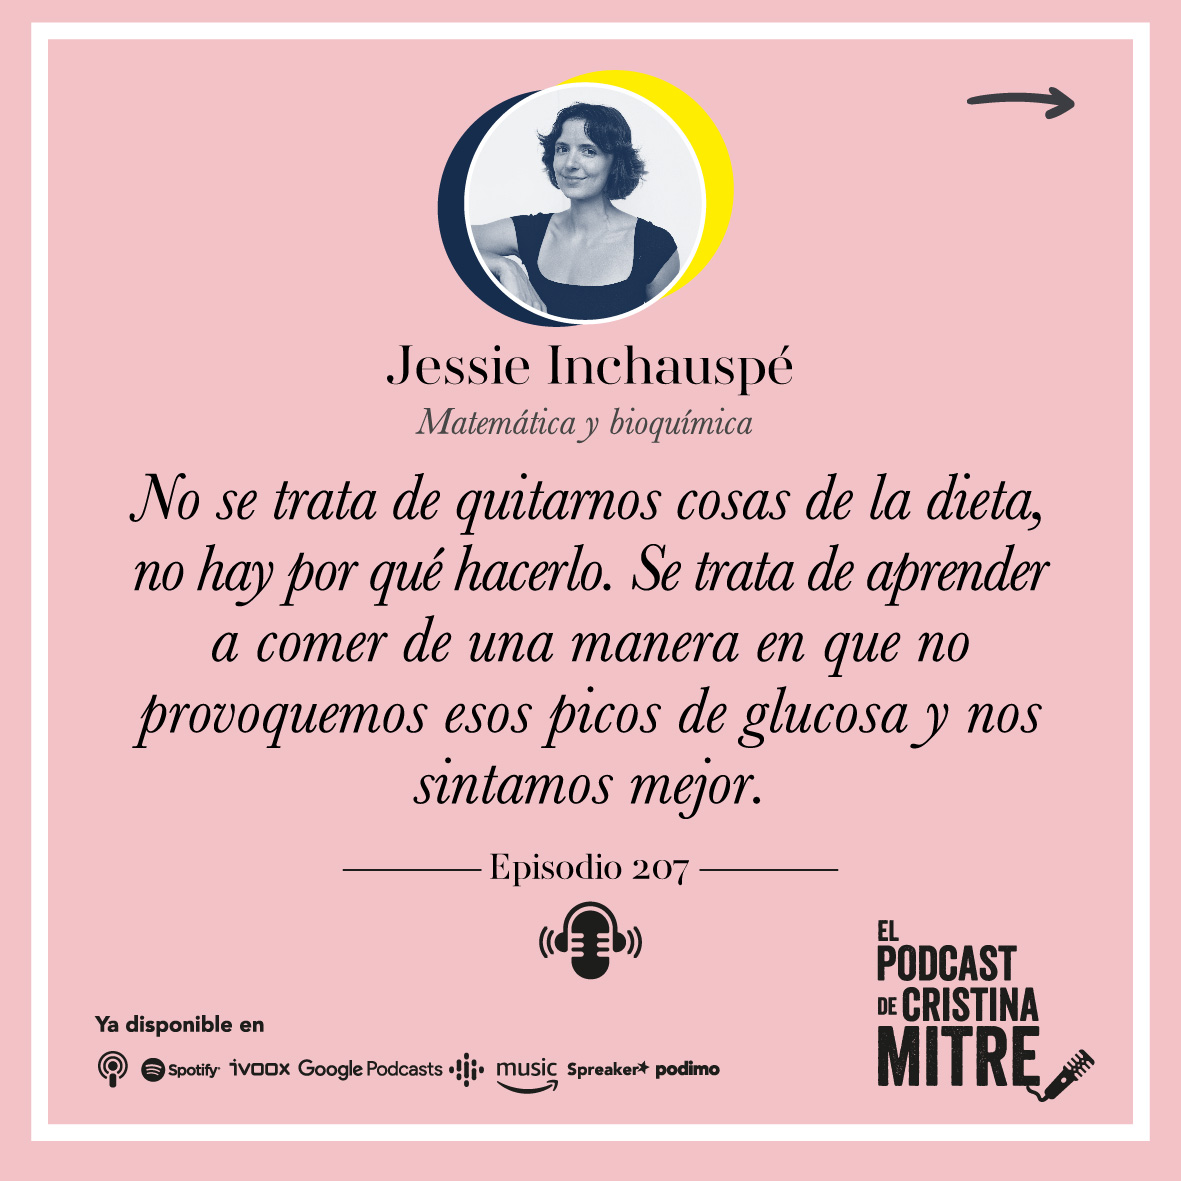 El podcast de Cristina Mitre Jessie Inchauspe dieta